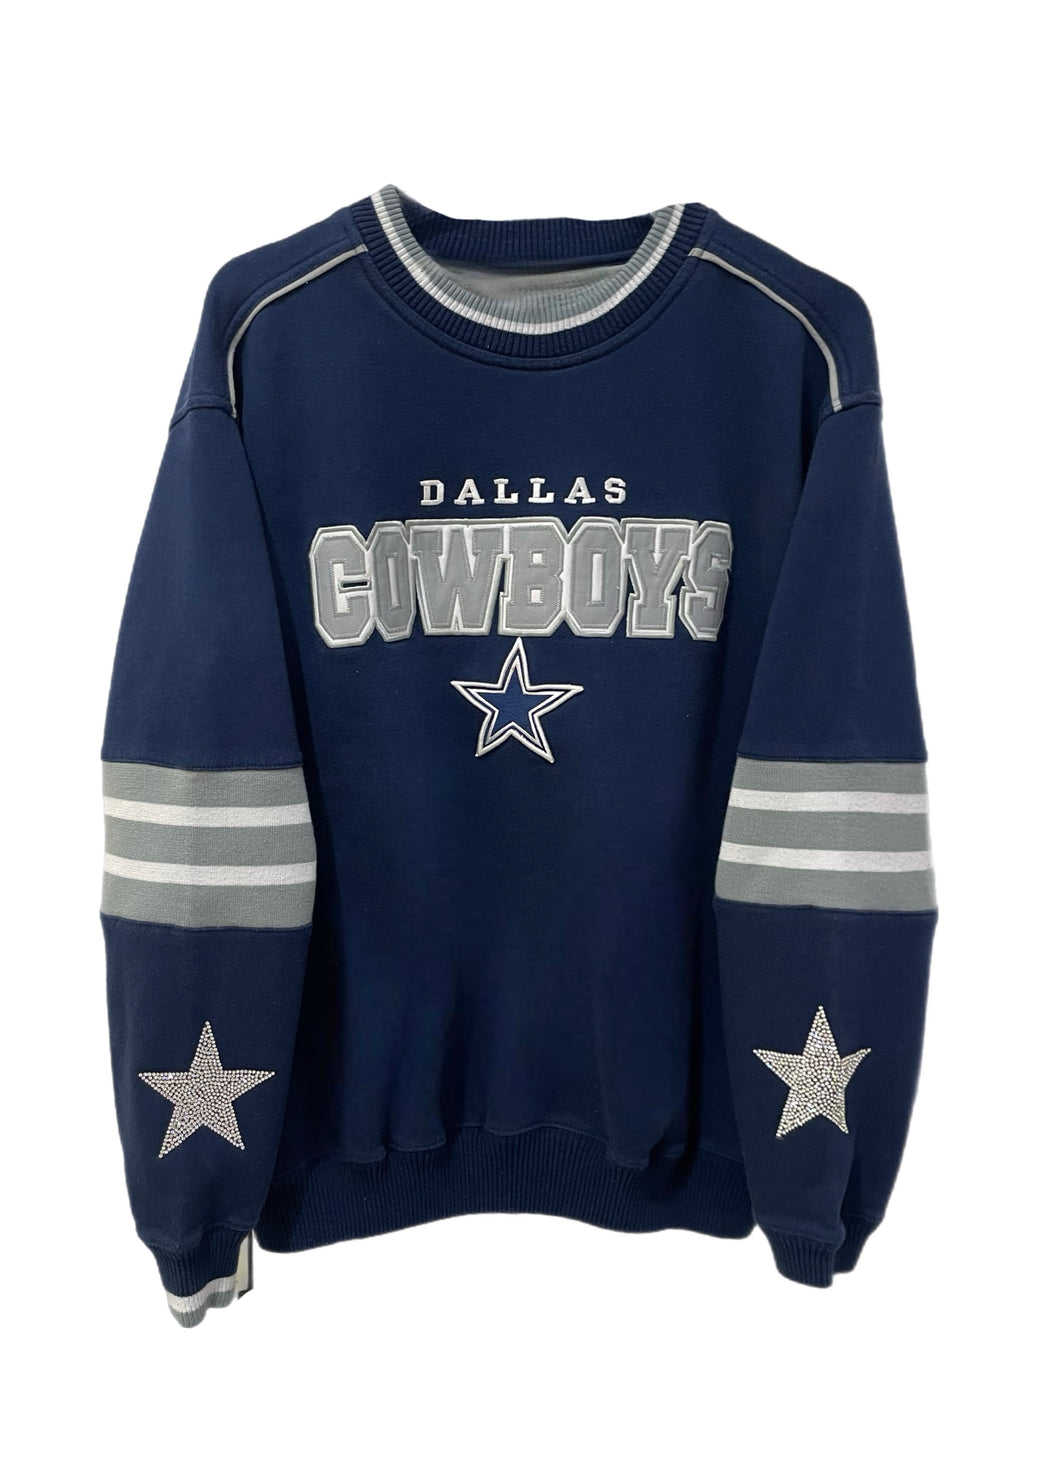 Dallas Cowboys, Football One of a KIND Vintage Sweatshirt with Crystal Star Design